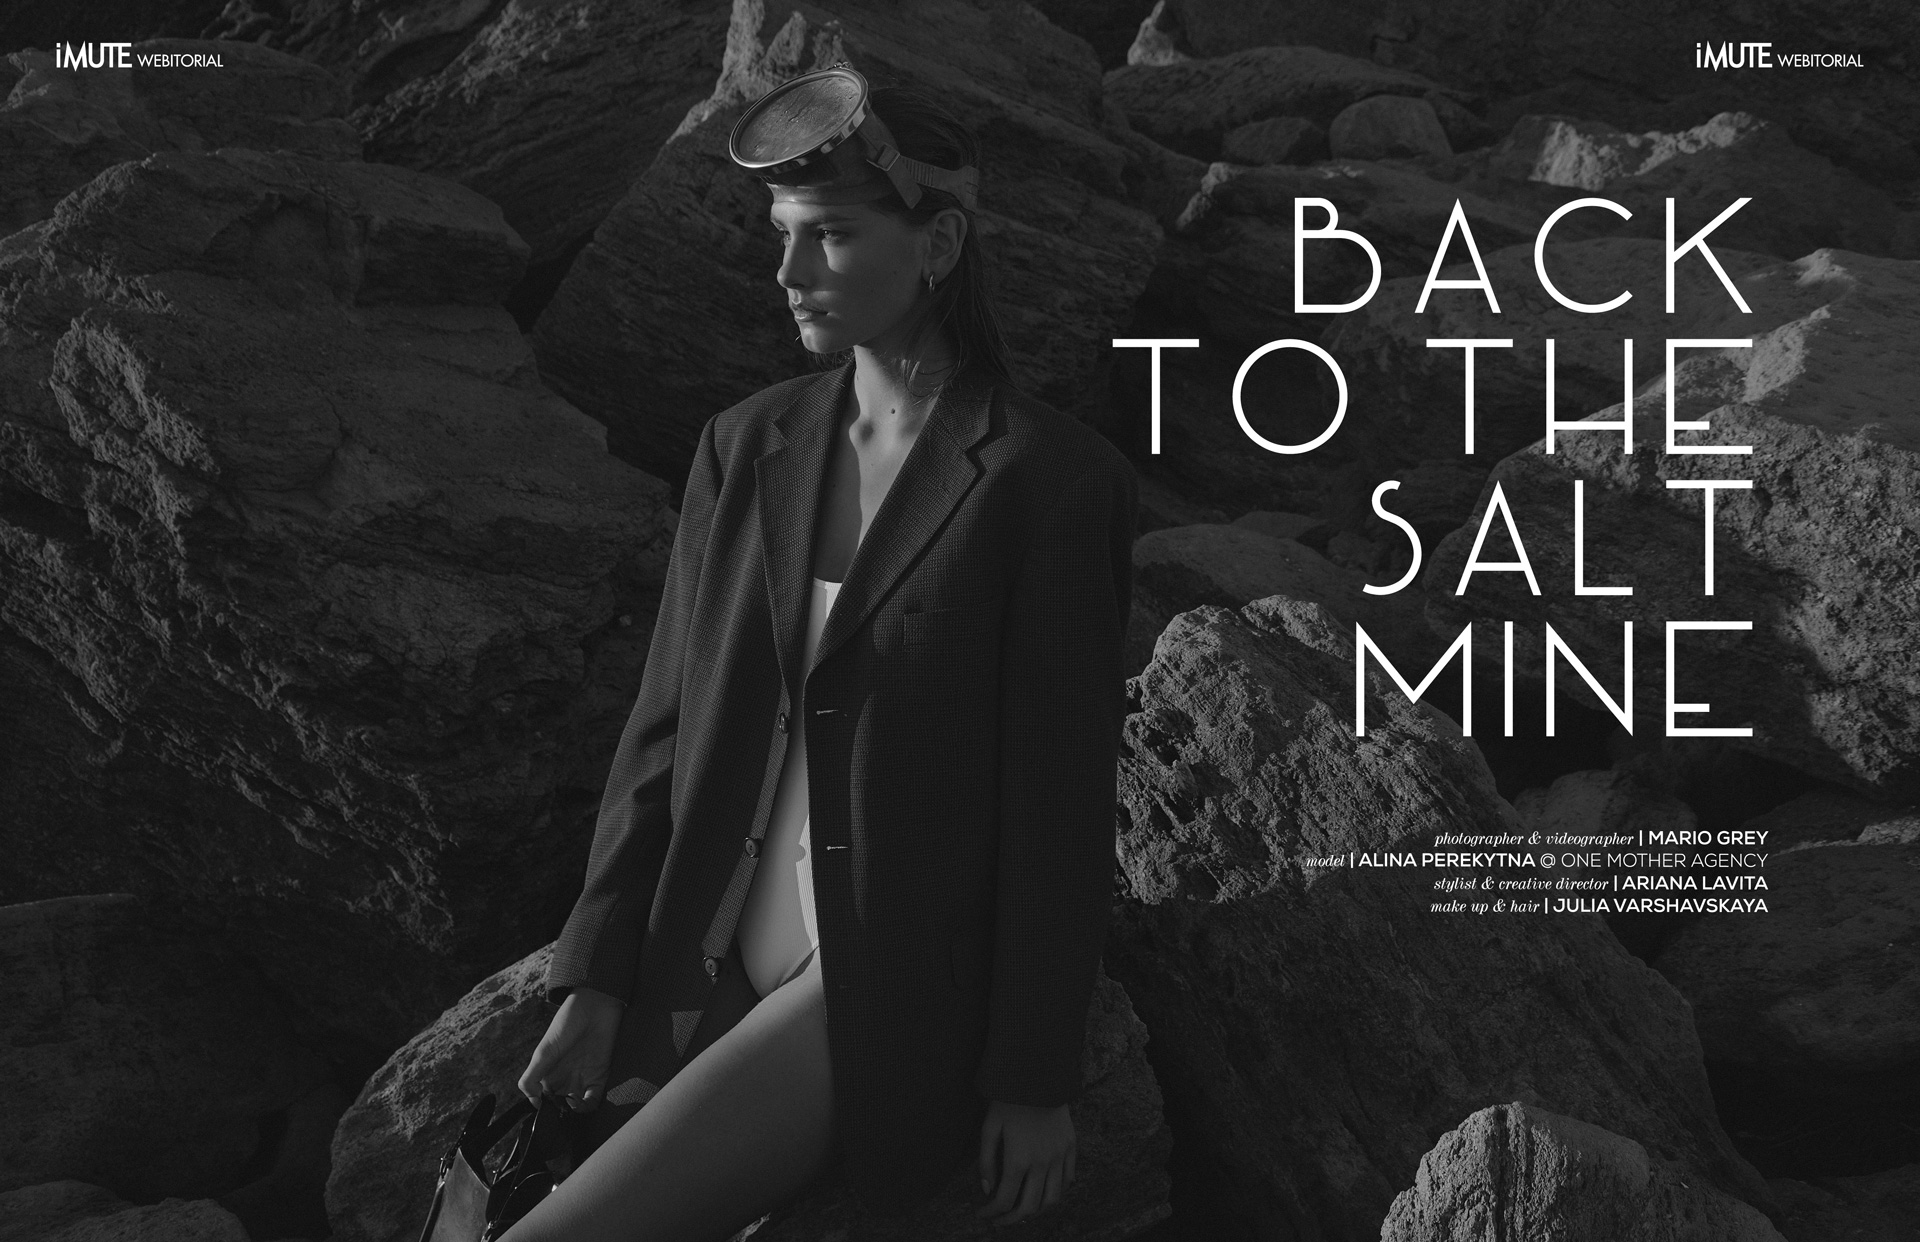 Back to the salt mine webitorial for iMute Magazine  PHOTOGRAPHER & VIDEOGRAPHER | MARIO GREY MODEL | ALINA PEREKYTNA @ ONE MOTHER AGENCY STYLIST & CREATIVE DIRECTOR | ARIANA LAVITA MAKEUP & HAIR | JULIA VARSHAVSKAYA